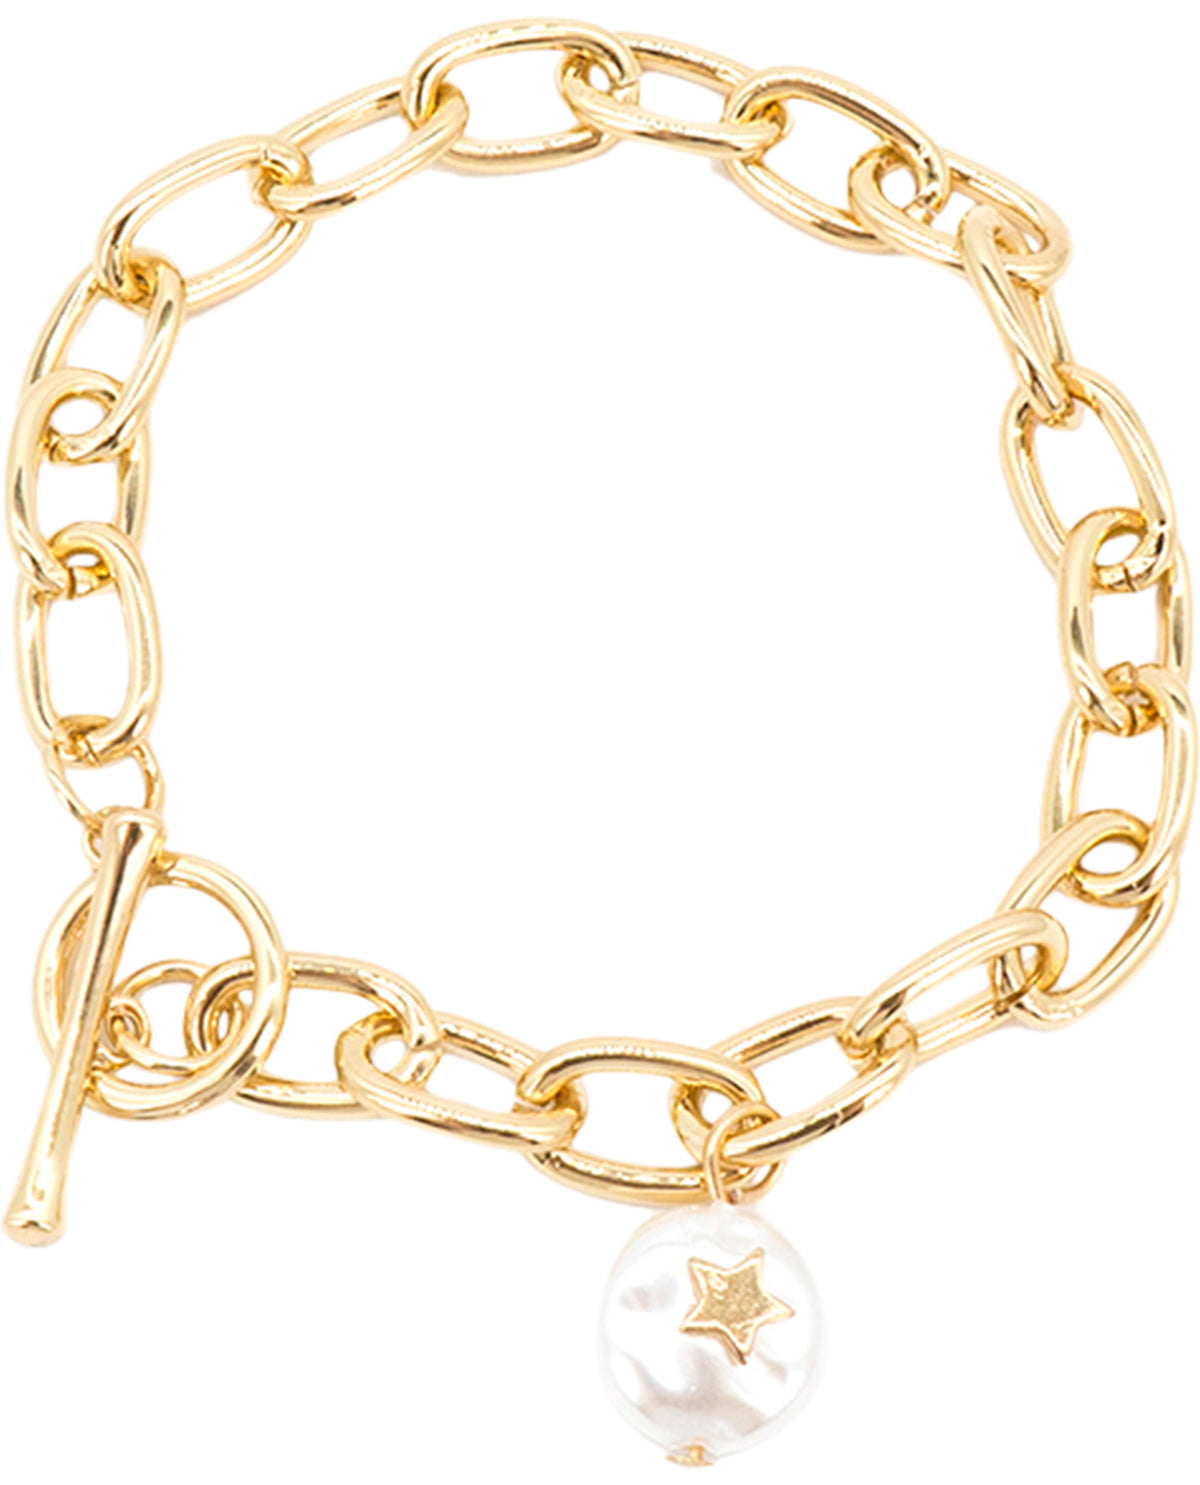 Linked Chain Toggle Bracelet